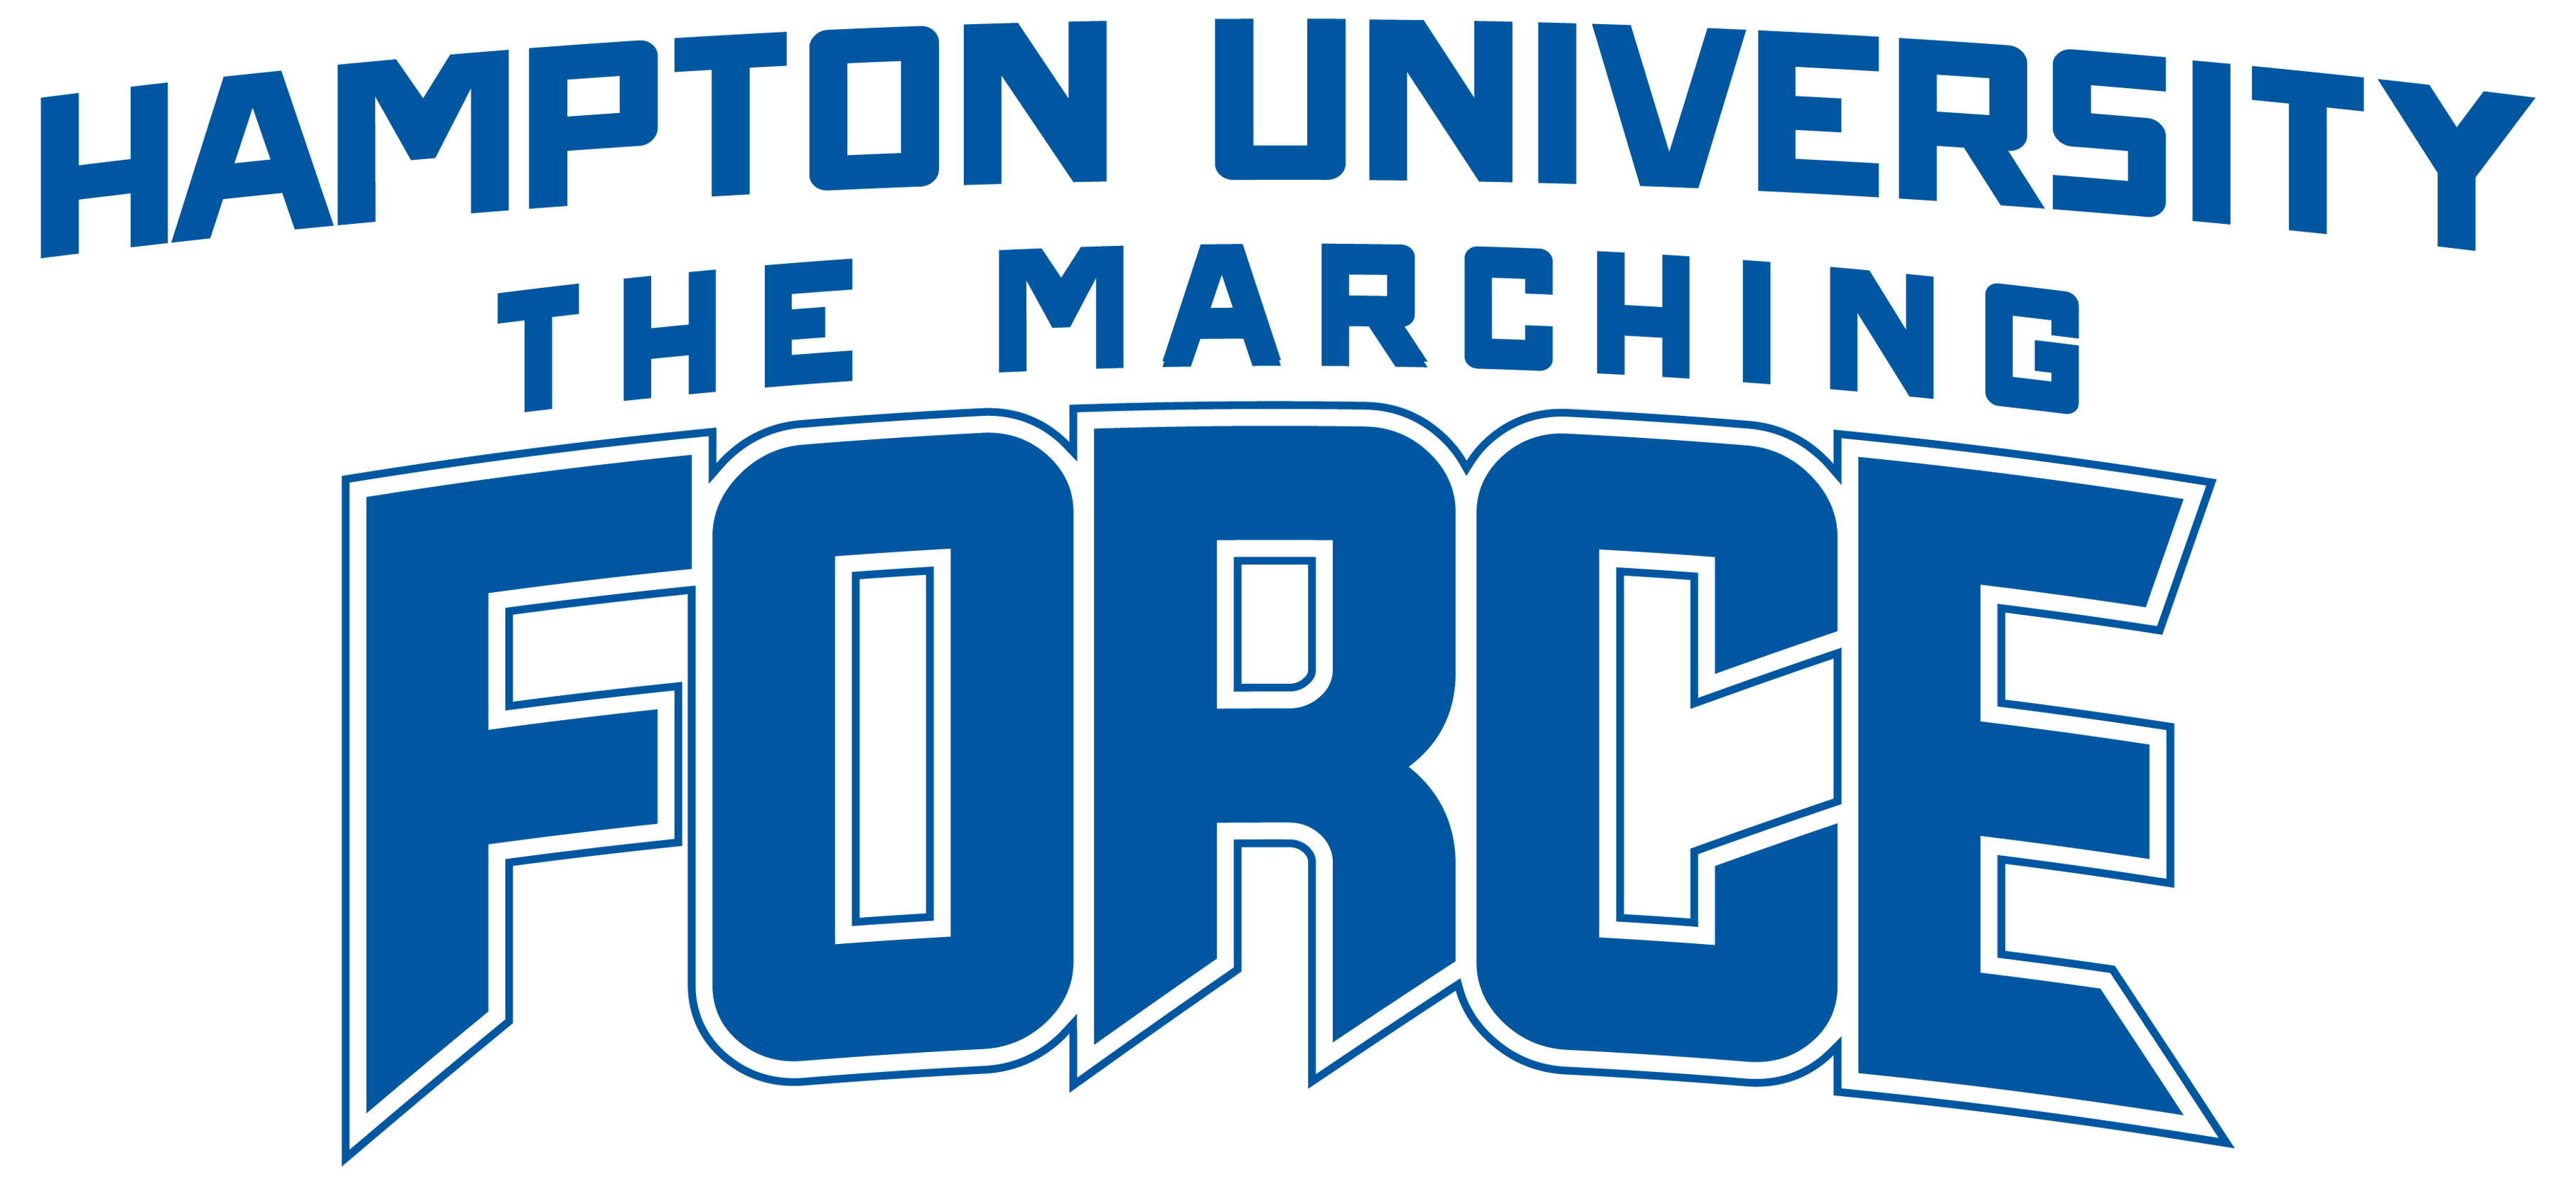 The Hampton University Marching Force